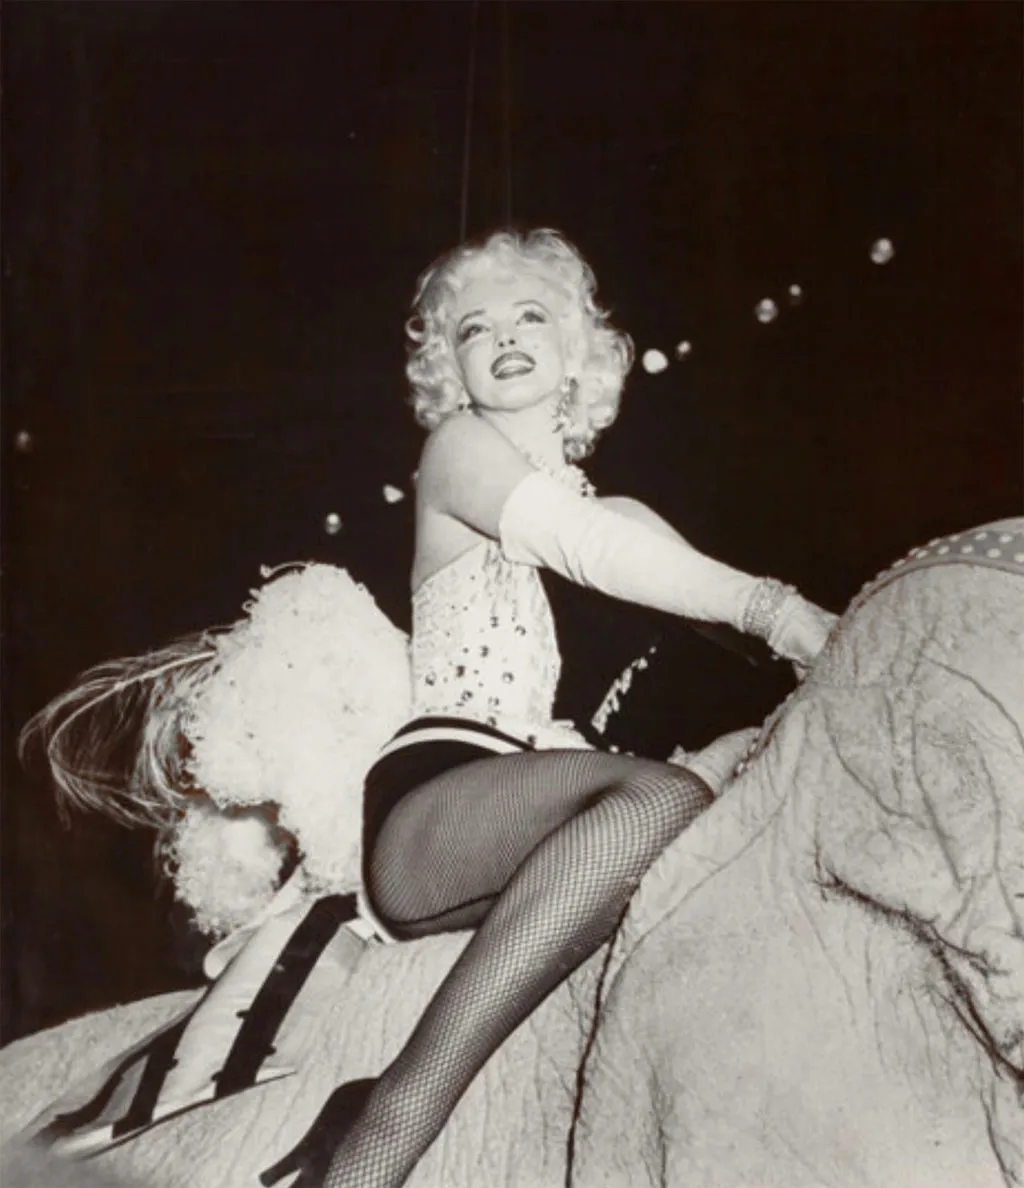 Marilyn Monroe Stage Performance Photos | FMV6